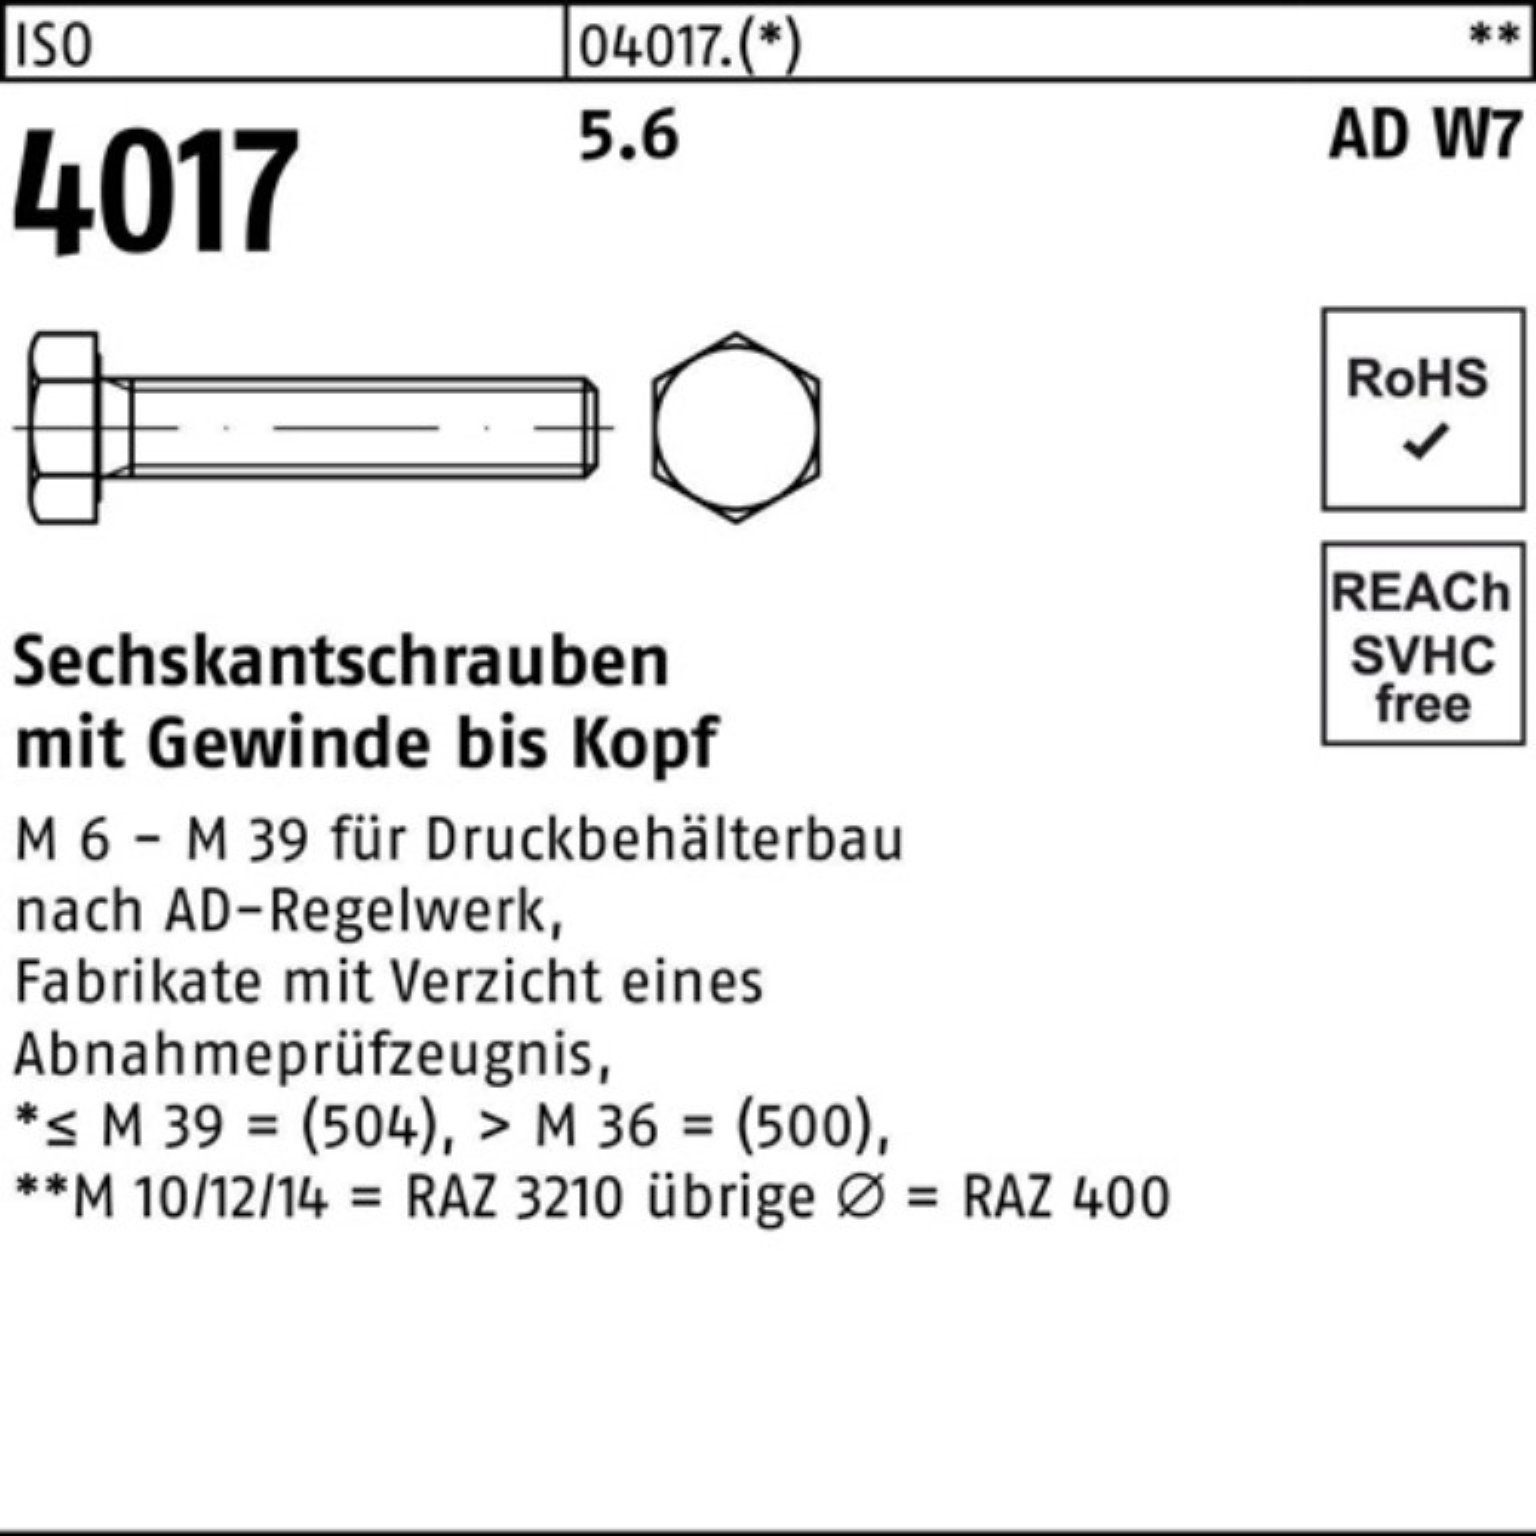 Bufab Sechskantschraube 100er Pack Sechskantschraube ISO 4017 VG M16x 25 5.6 AD W7 50 Stück I